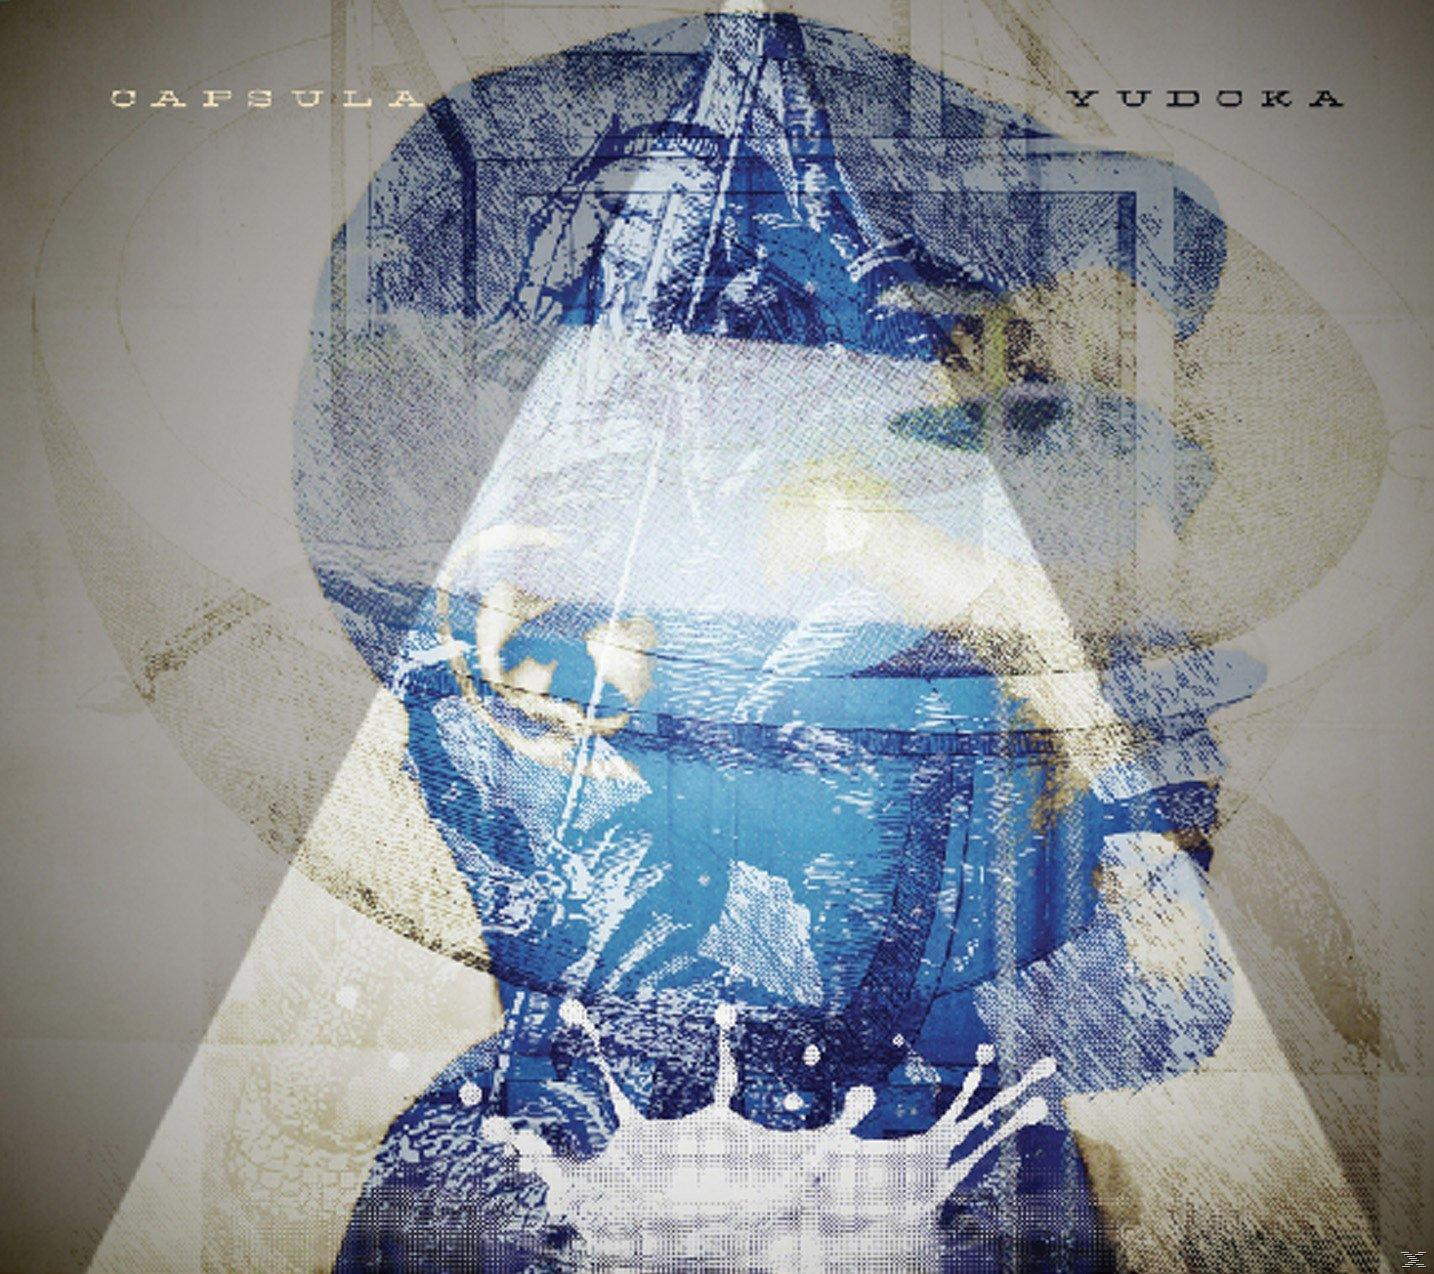 Yudoka - - (Vinyl) Capsula